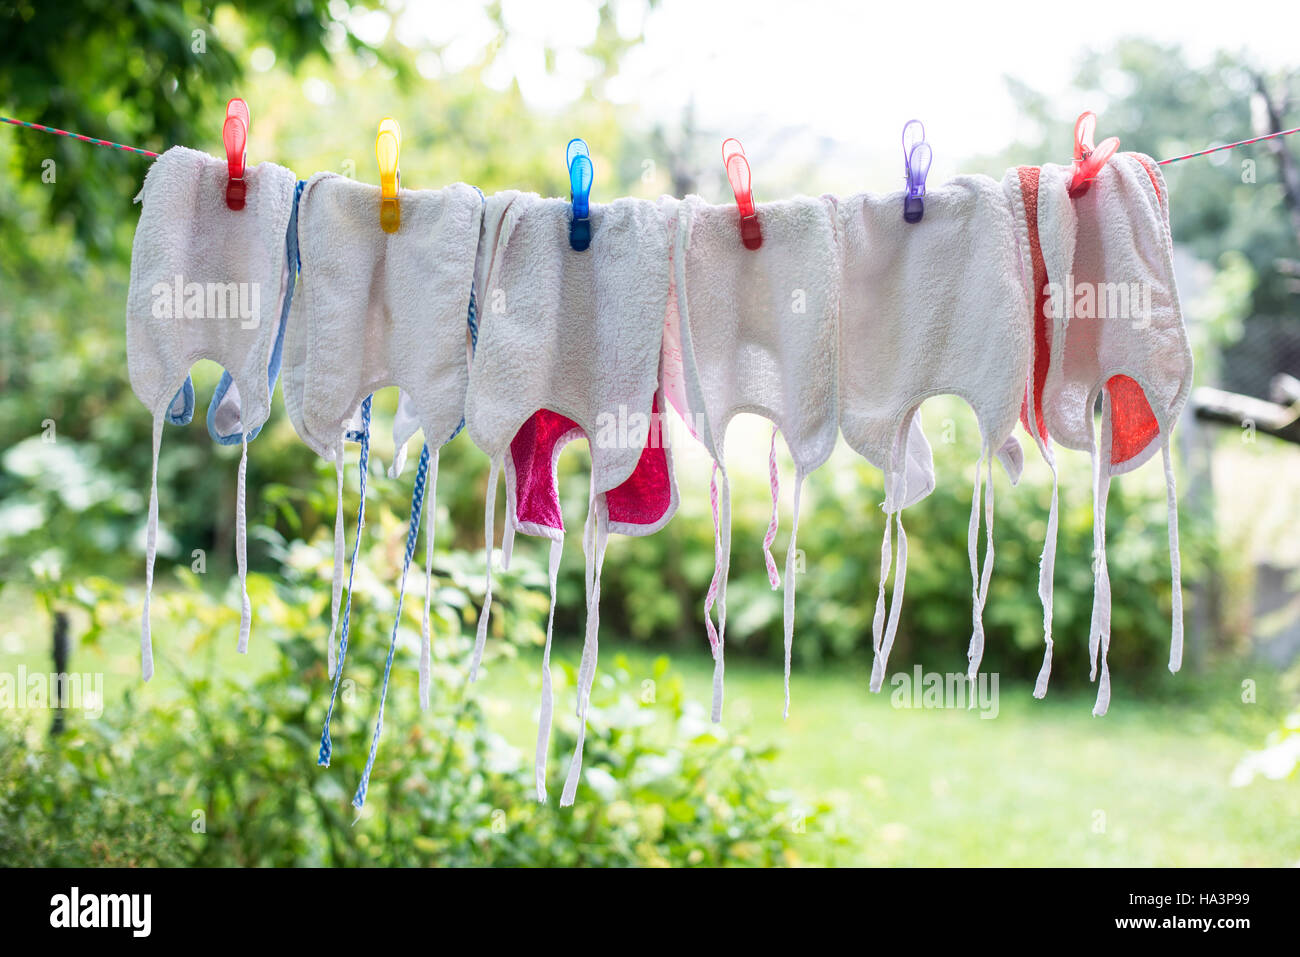 Baby bibs on laundry Stock Photo